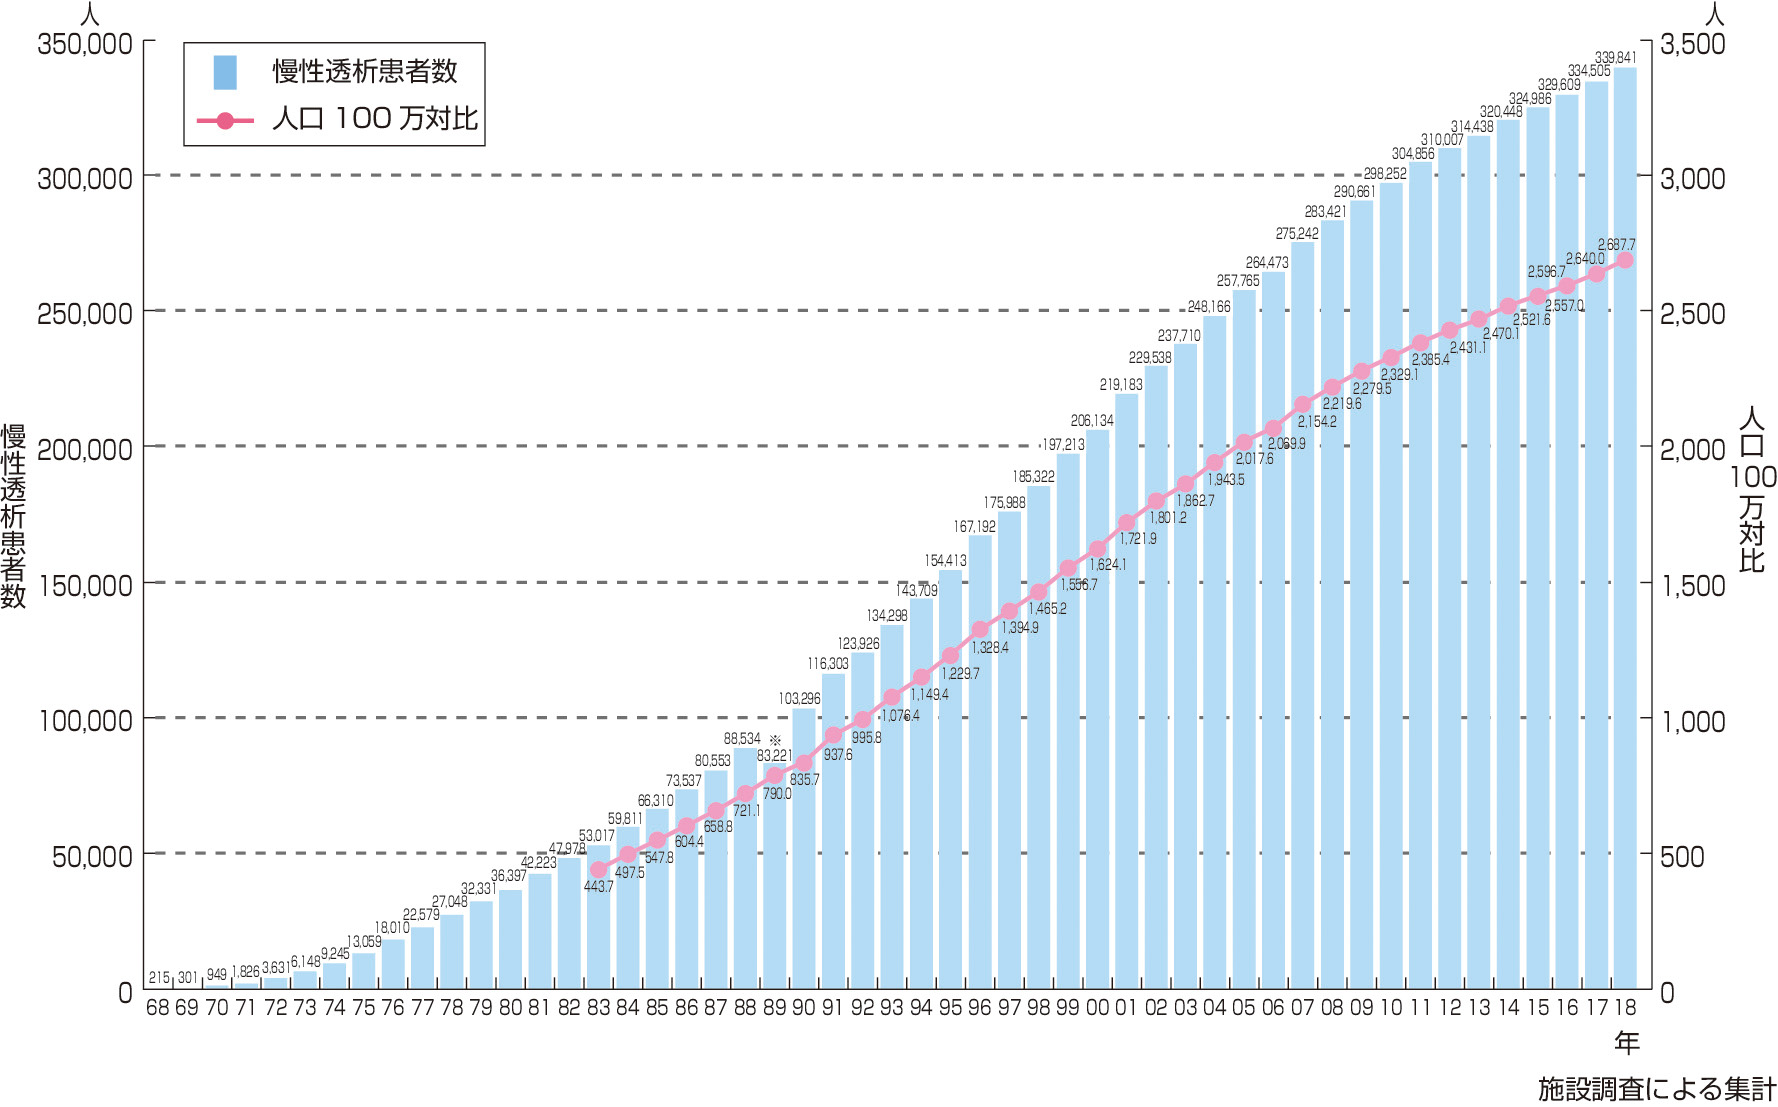 図1　慢性透析患者数の推移 (一般社団法人日本透析医学会「わが国の慢性透析療法の現況 (2018年12月31日現在) 」)． 